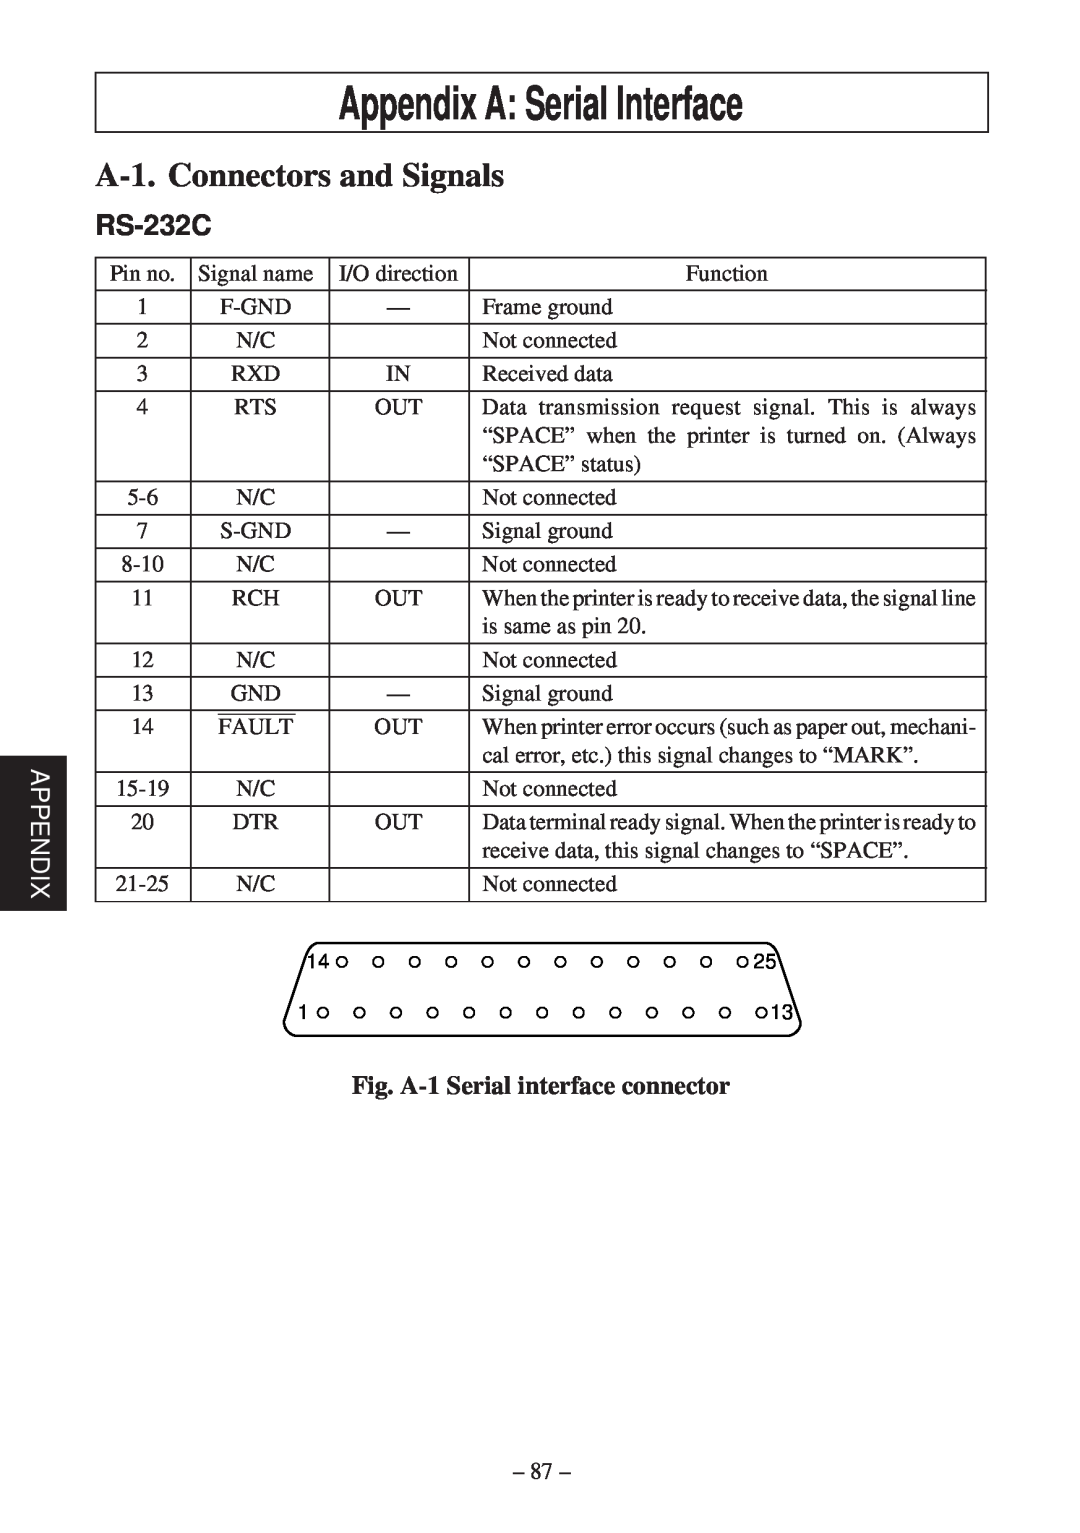 Star Micronics SP200F user manual Appendix A Serial Interface, A-1. Connectors and Signals, RS-232C 